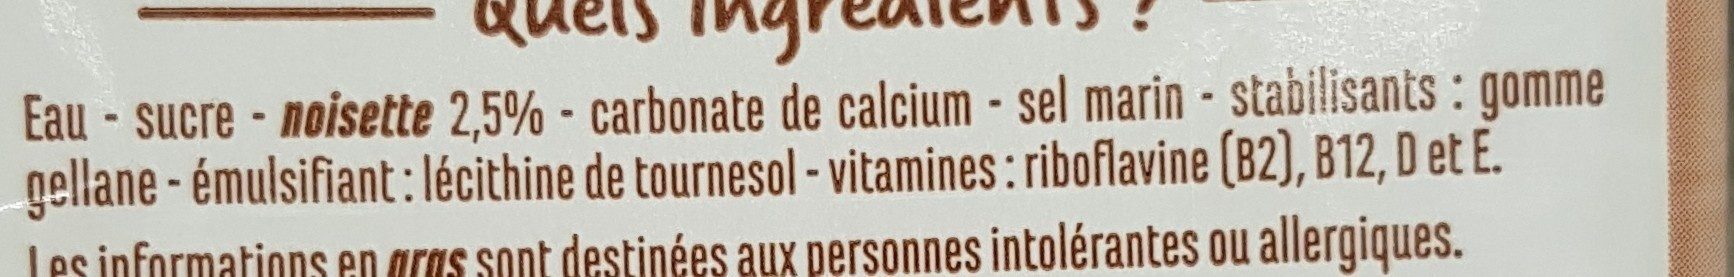 Boisson végétale noisette - Ingredienser - fr